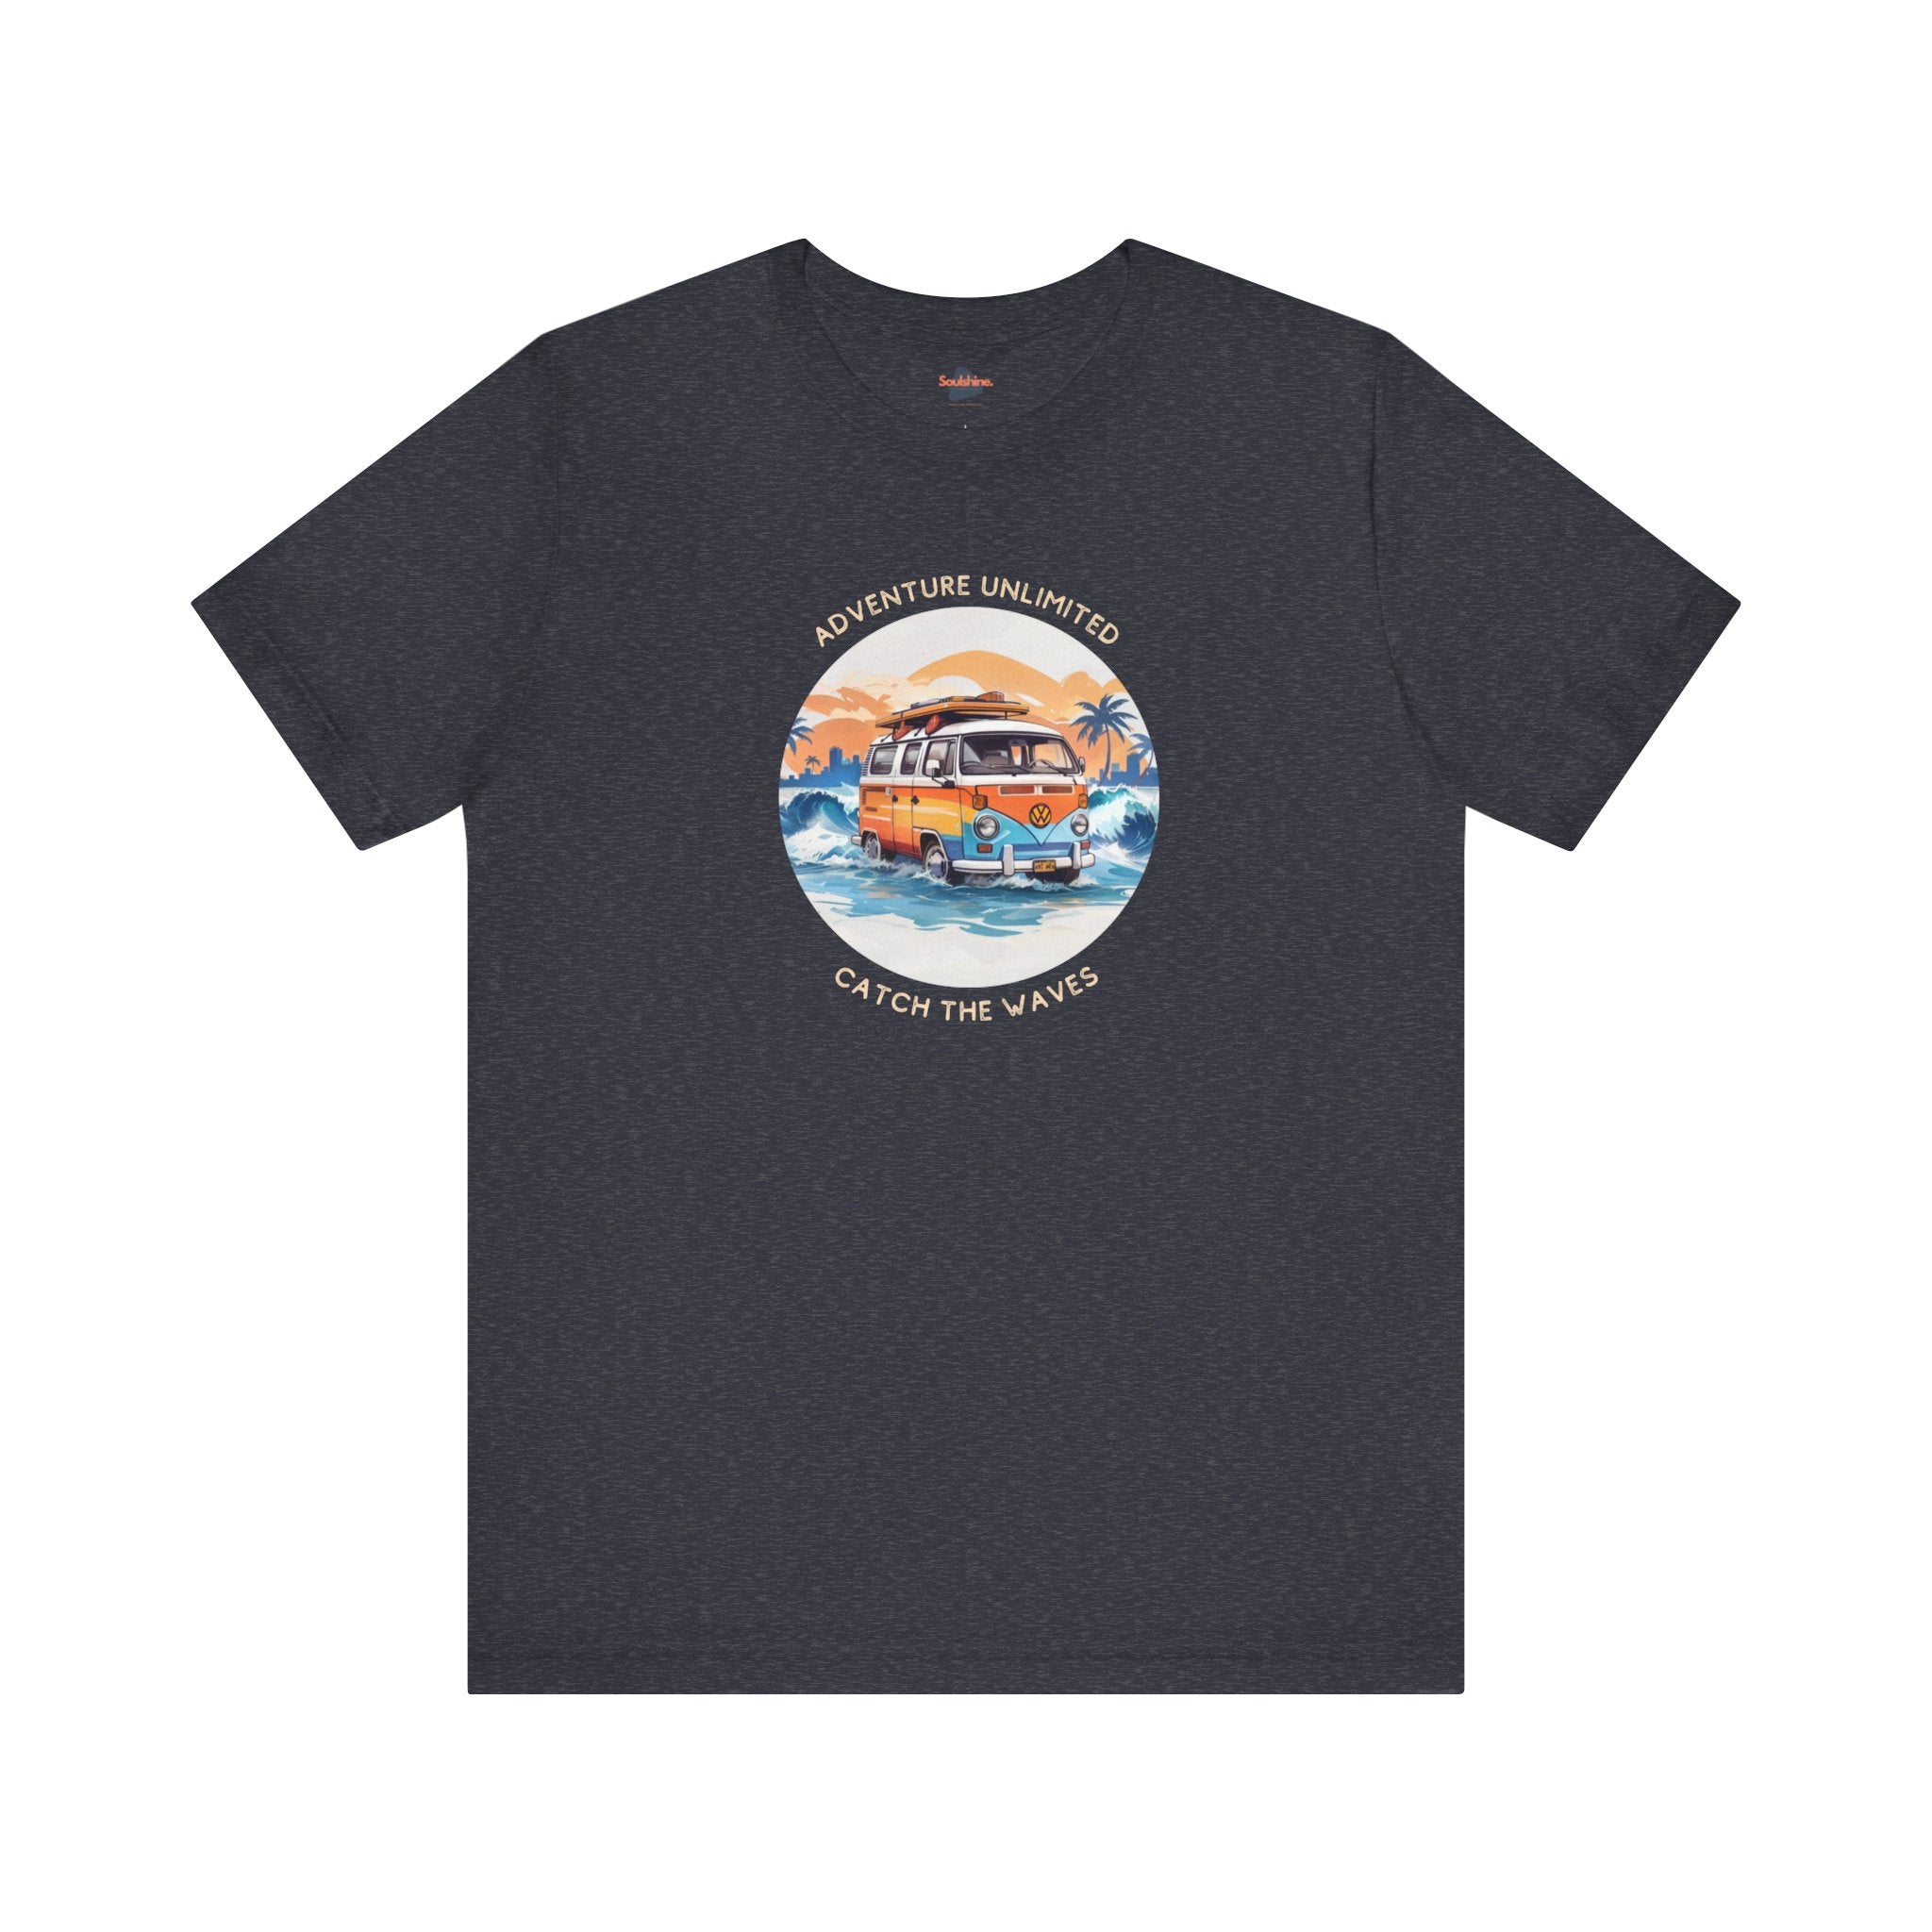 Adventure Unlimited Navy Graphic Beach Scene Tee - Direct-to-Garment Printed Unisex Jersey Shirt